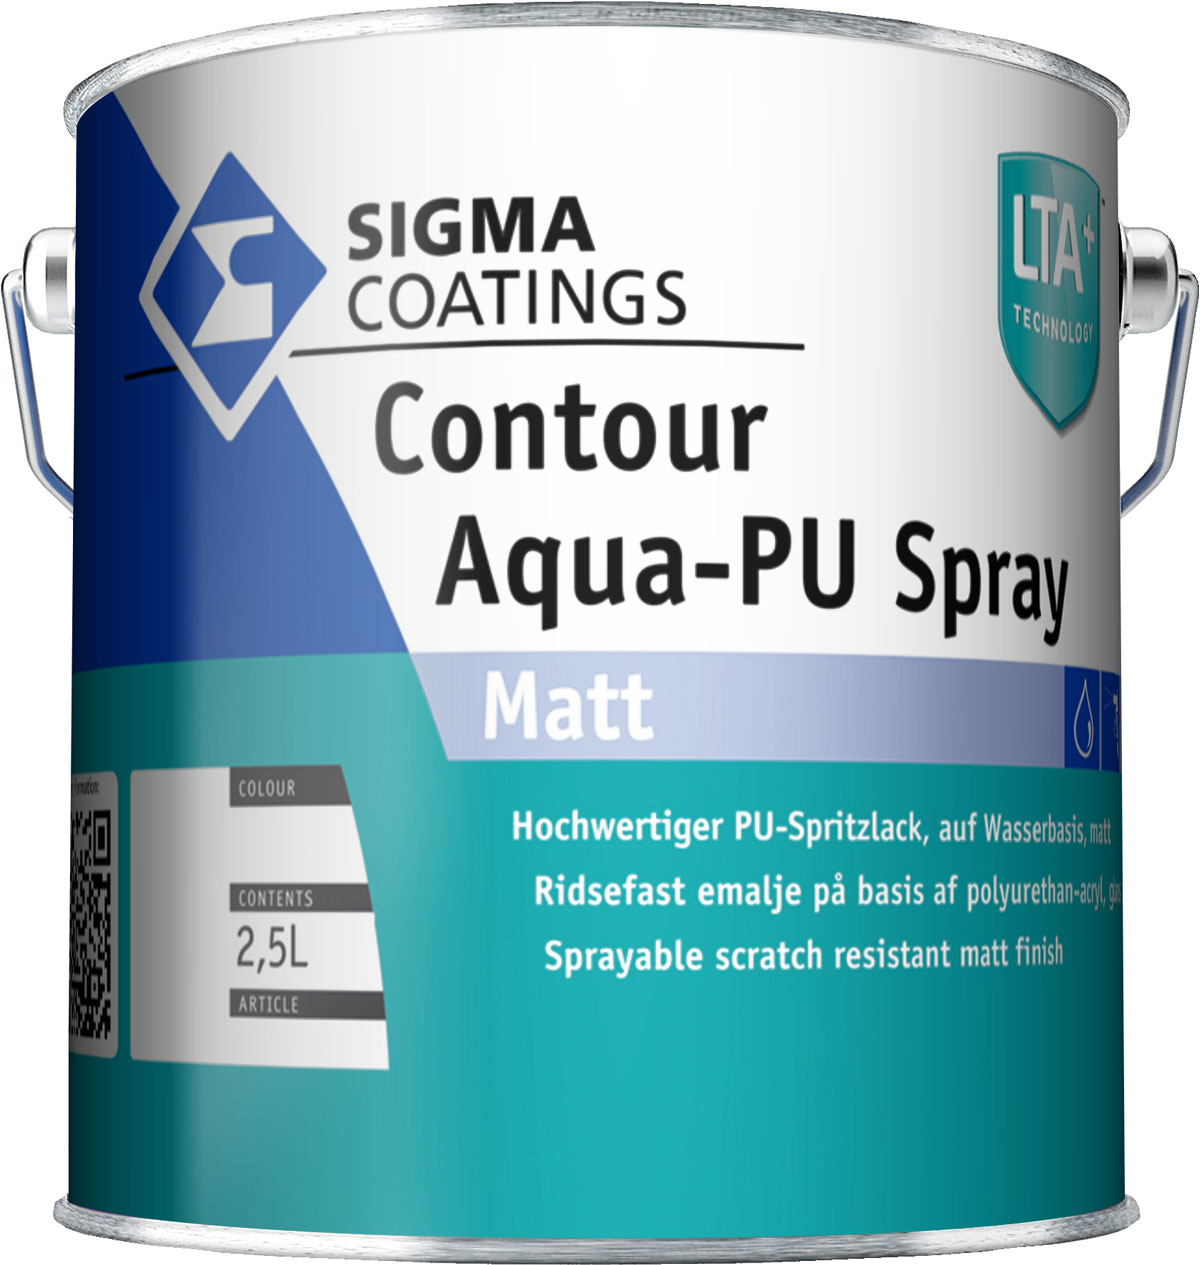 Sigma Contour Aqua-PU Spray Matt - AUSLAUF*